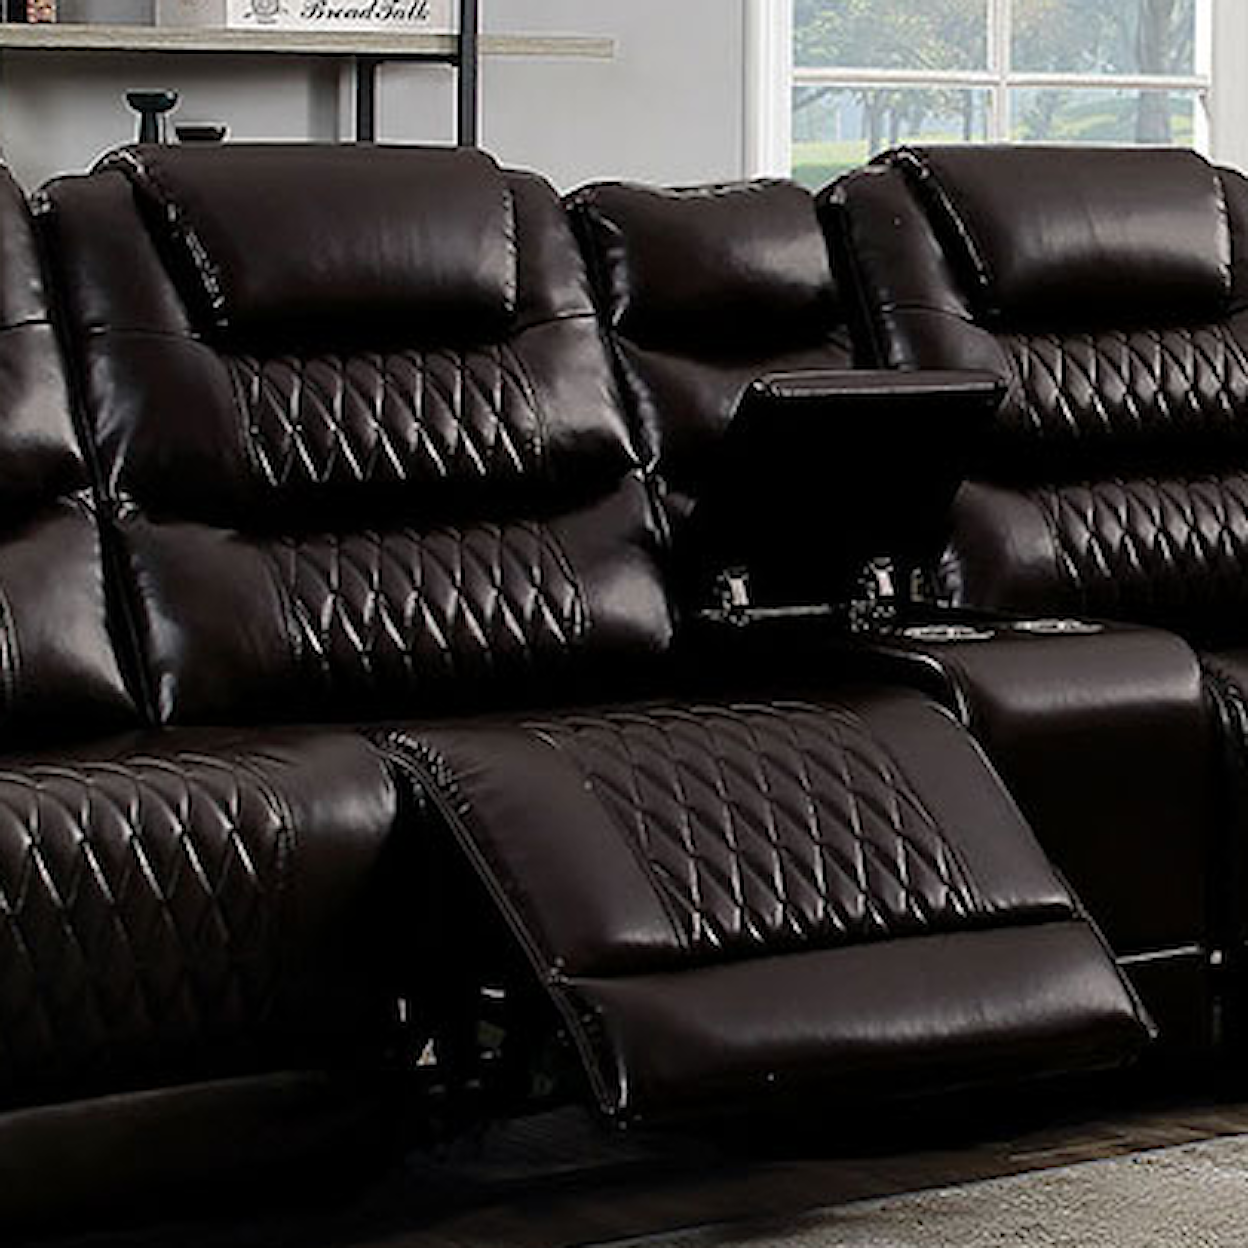 Furniture of America Mariah Upholstery Power Recliner